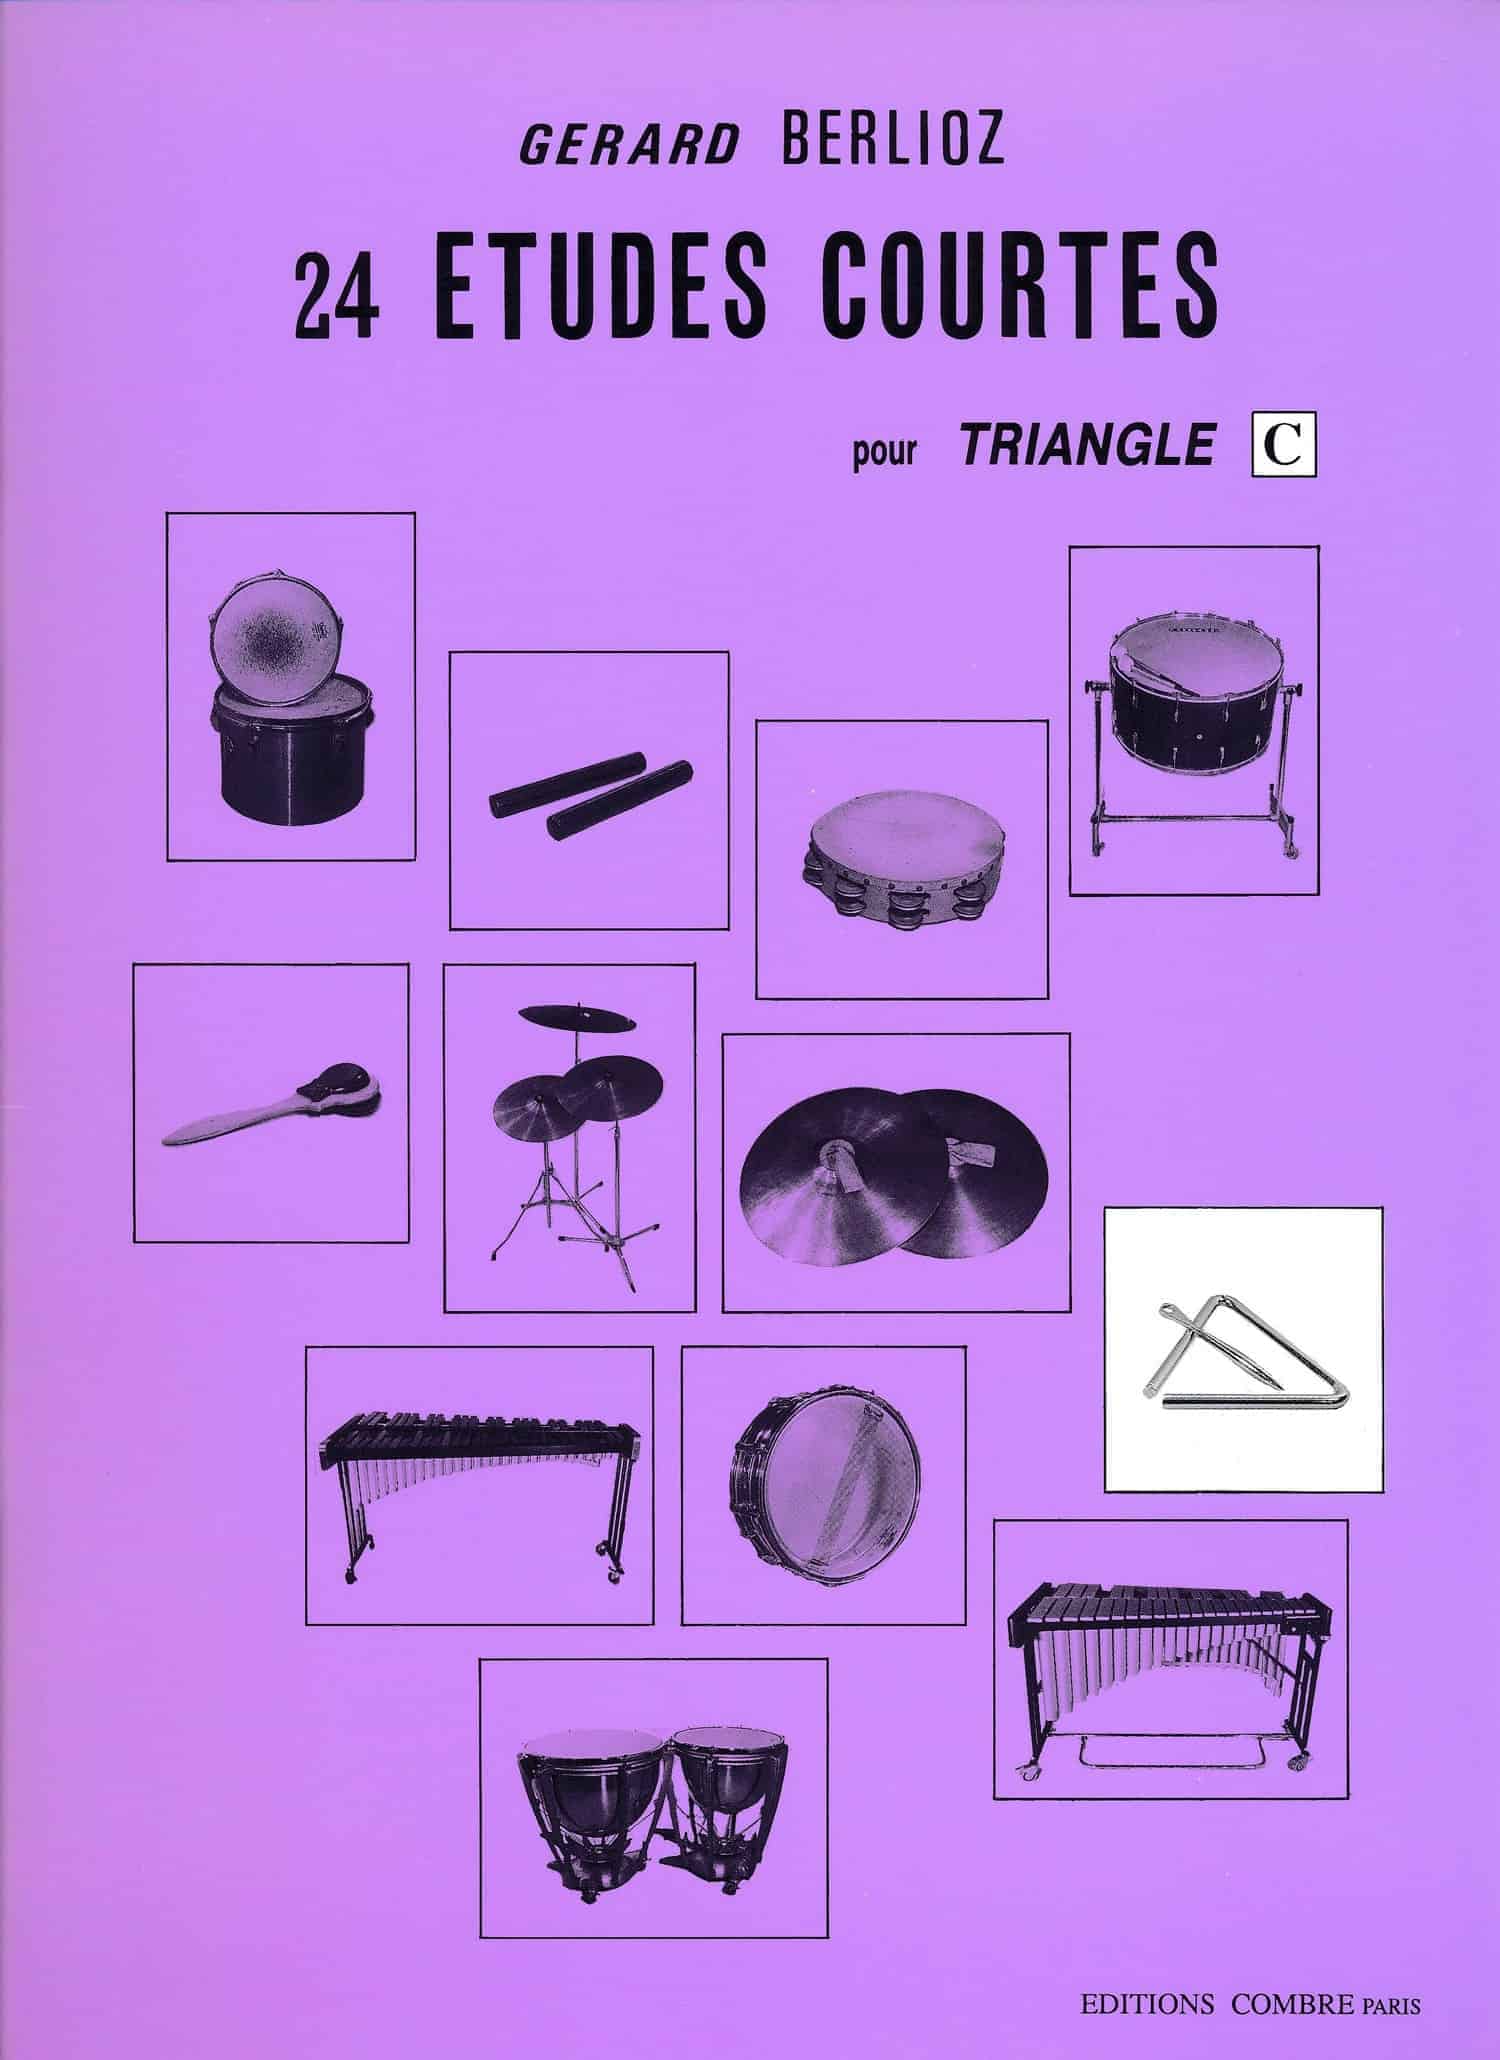 24 Etudes Courtes -triangle